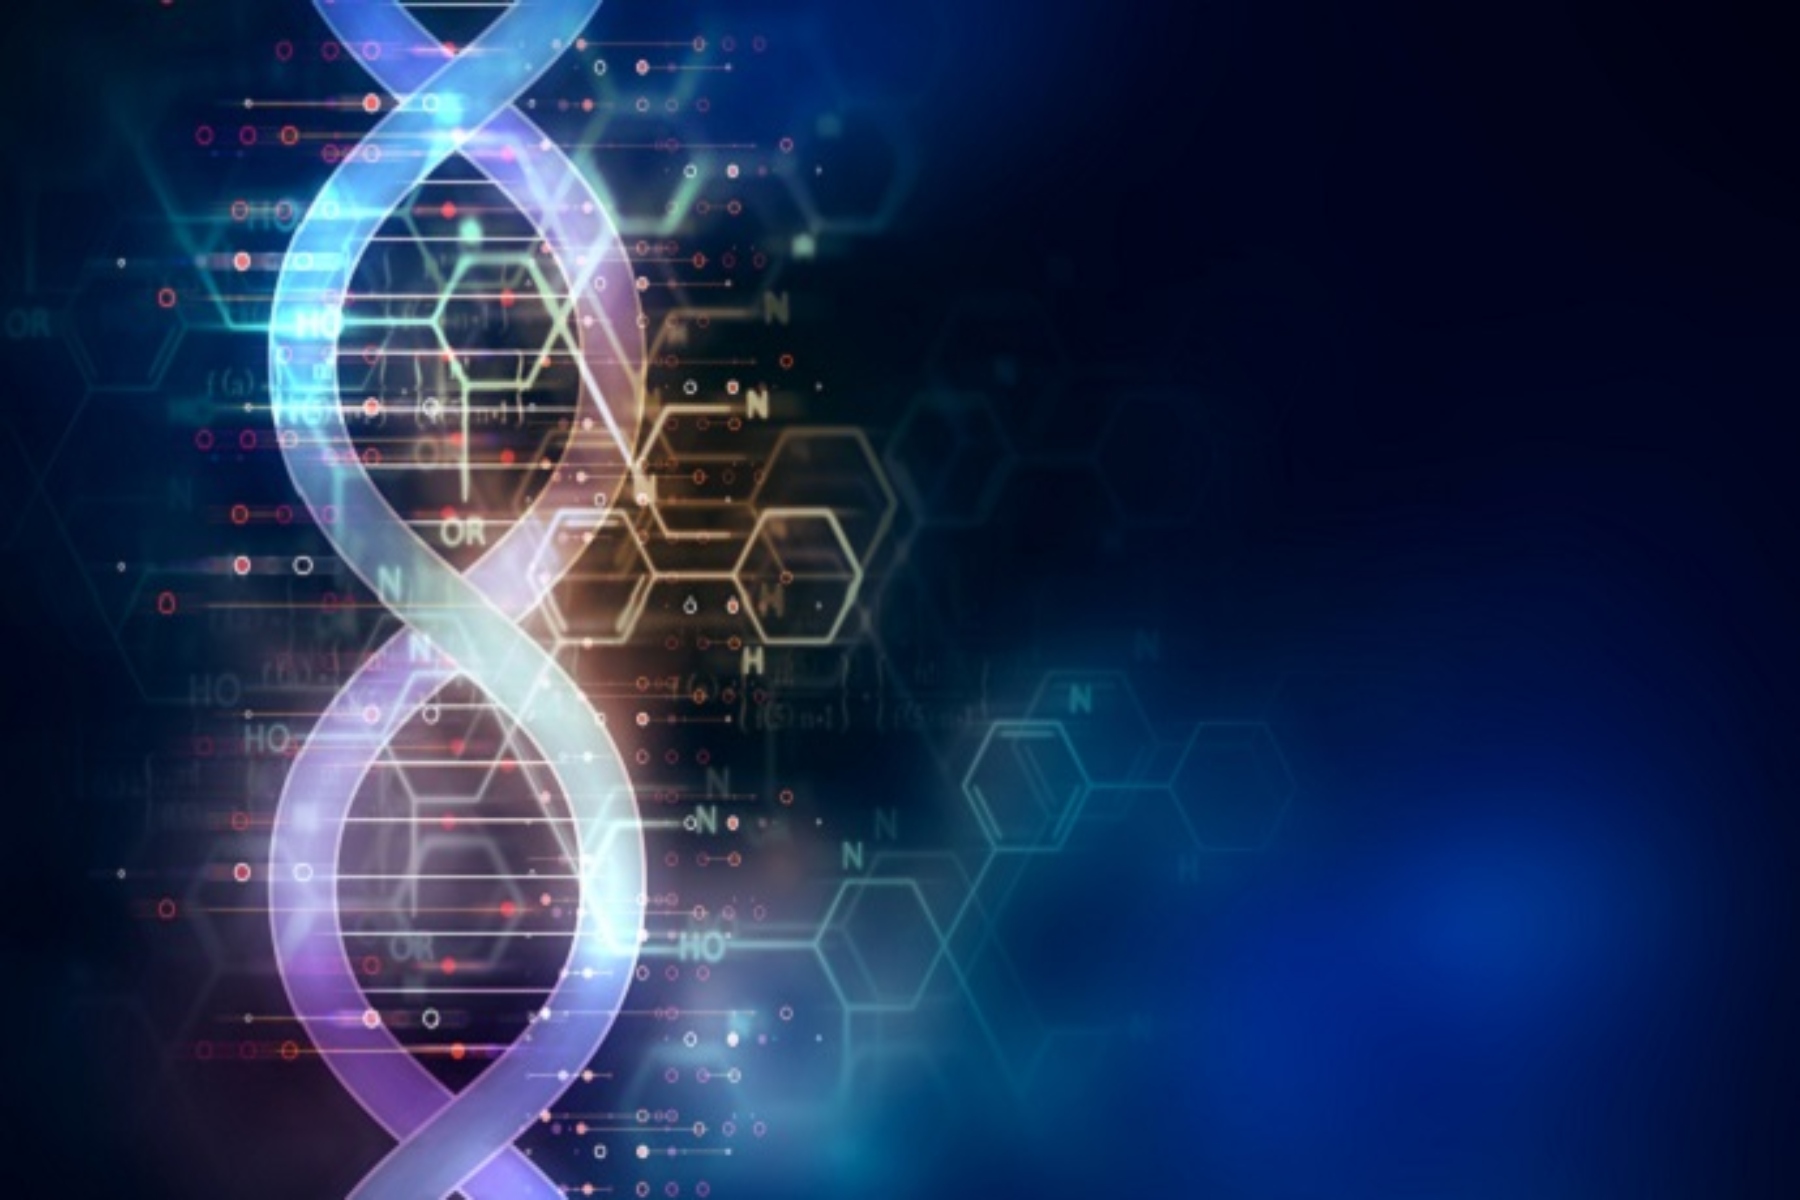 DNA γενετικές ασθένειες: Ένα μονάχα τεστ ανιχνεύει 50 γενετικές παθήσεις